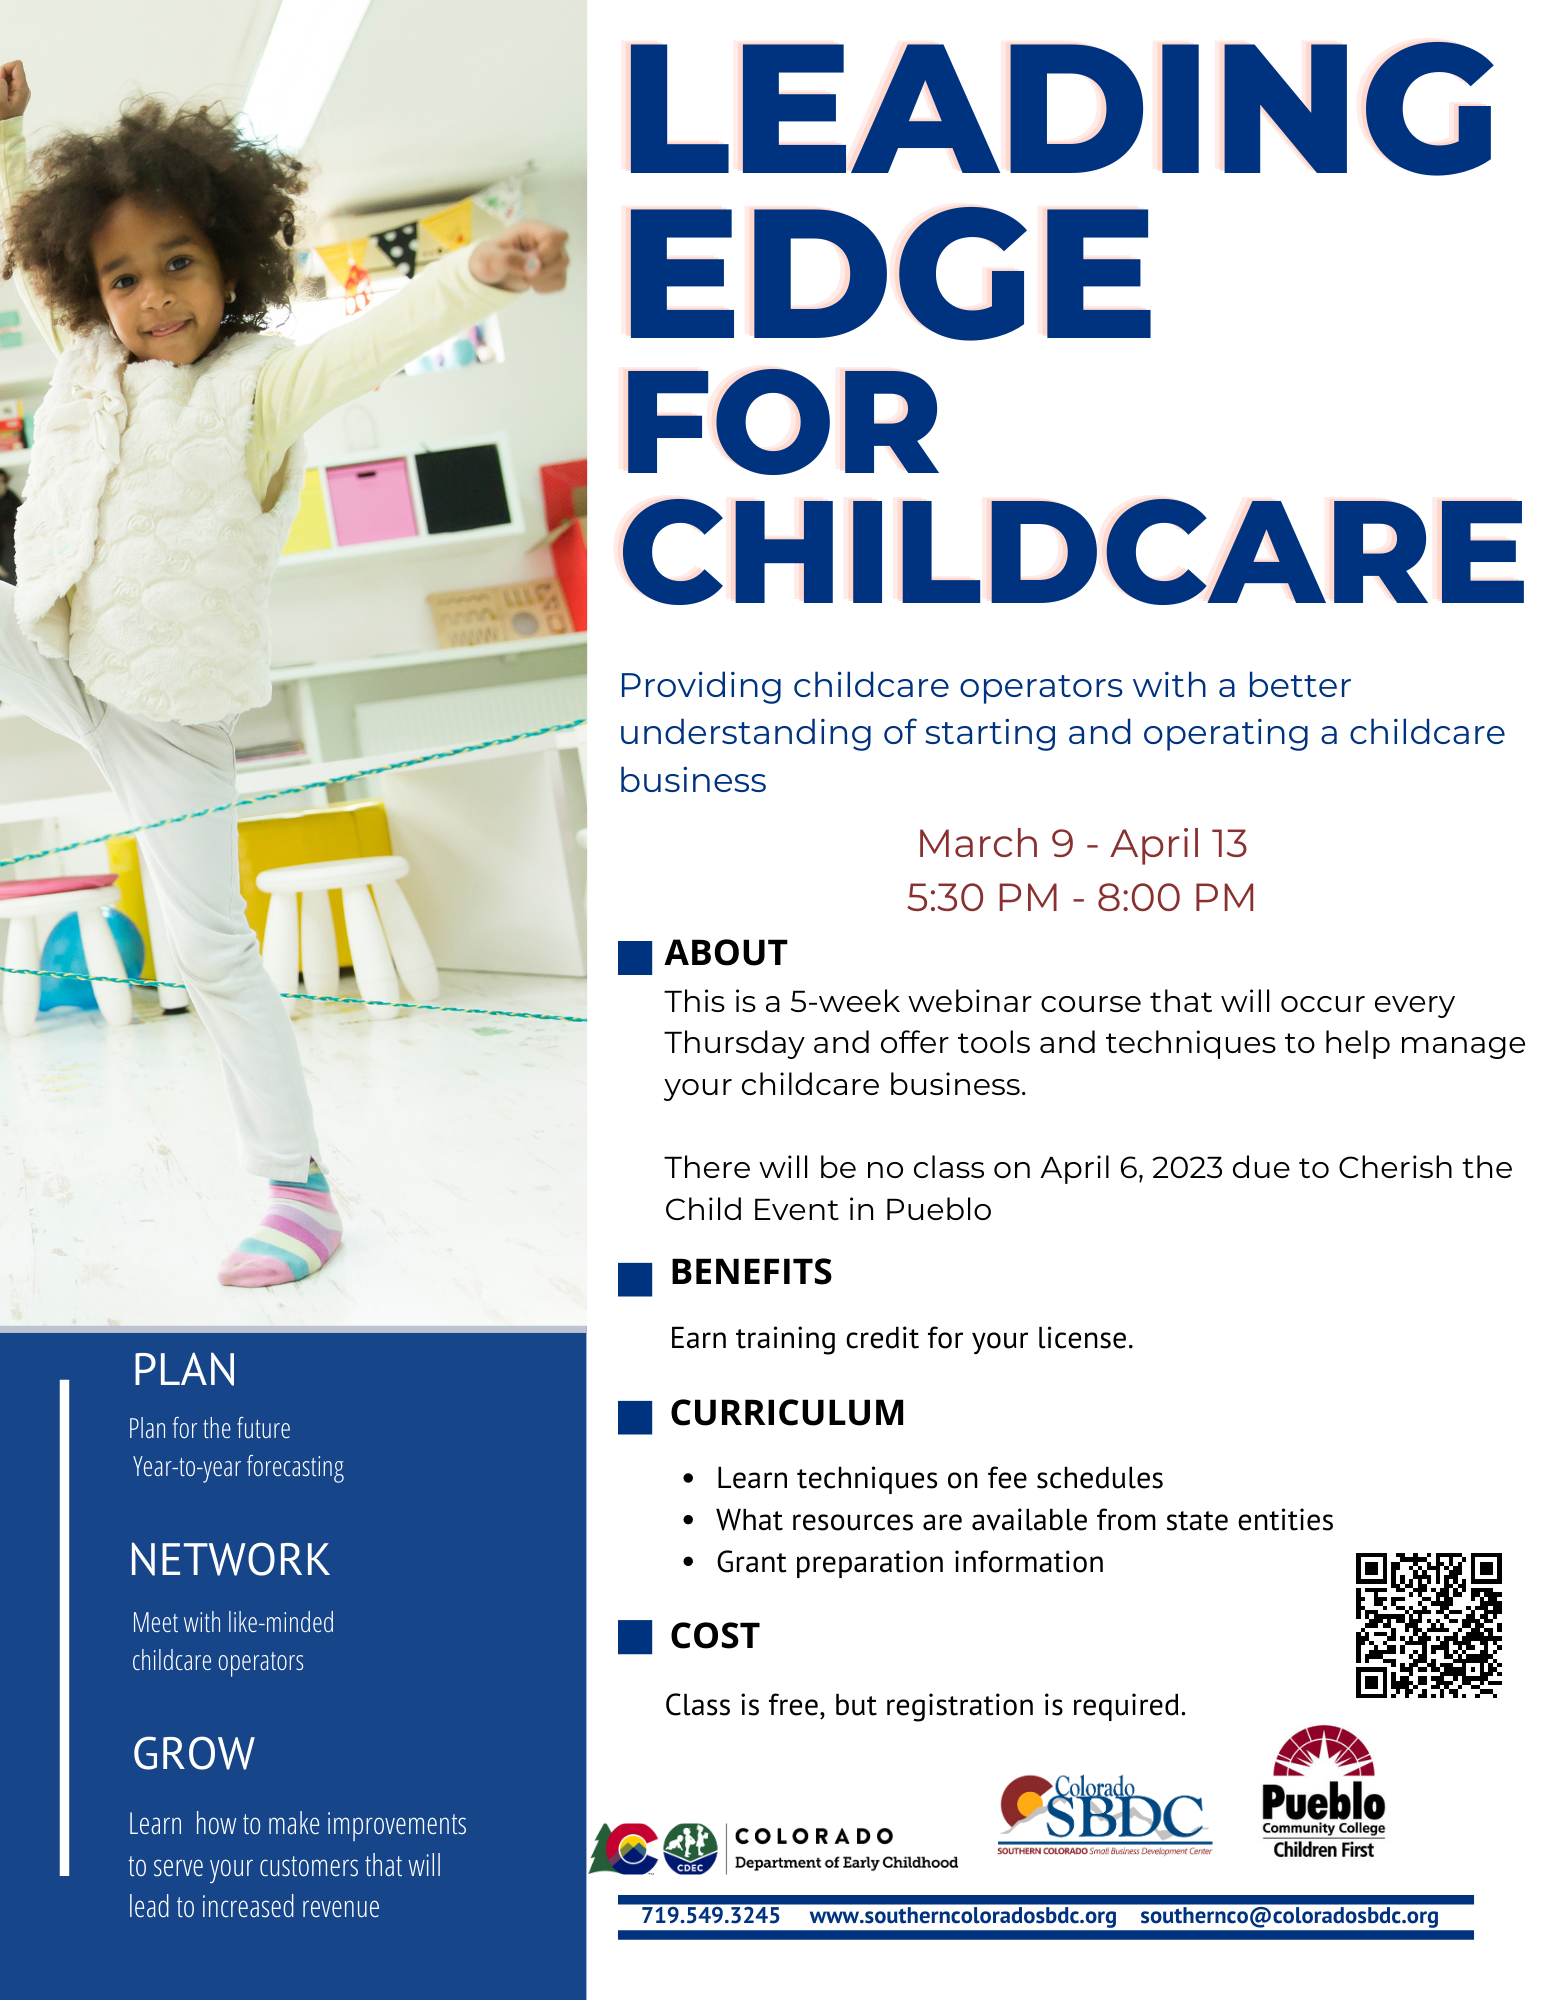 Leading Edge for Childcare SDBC image